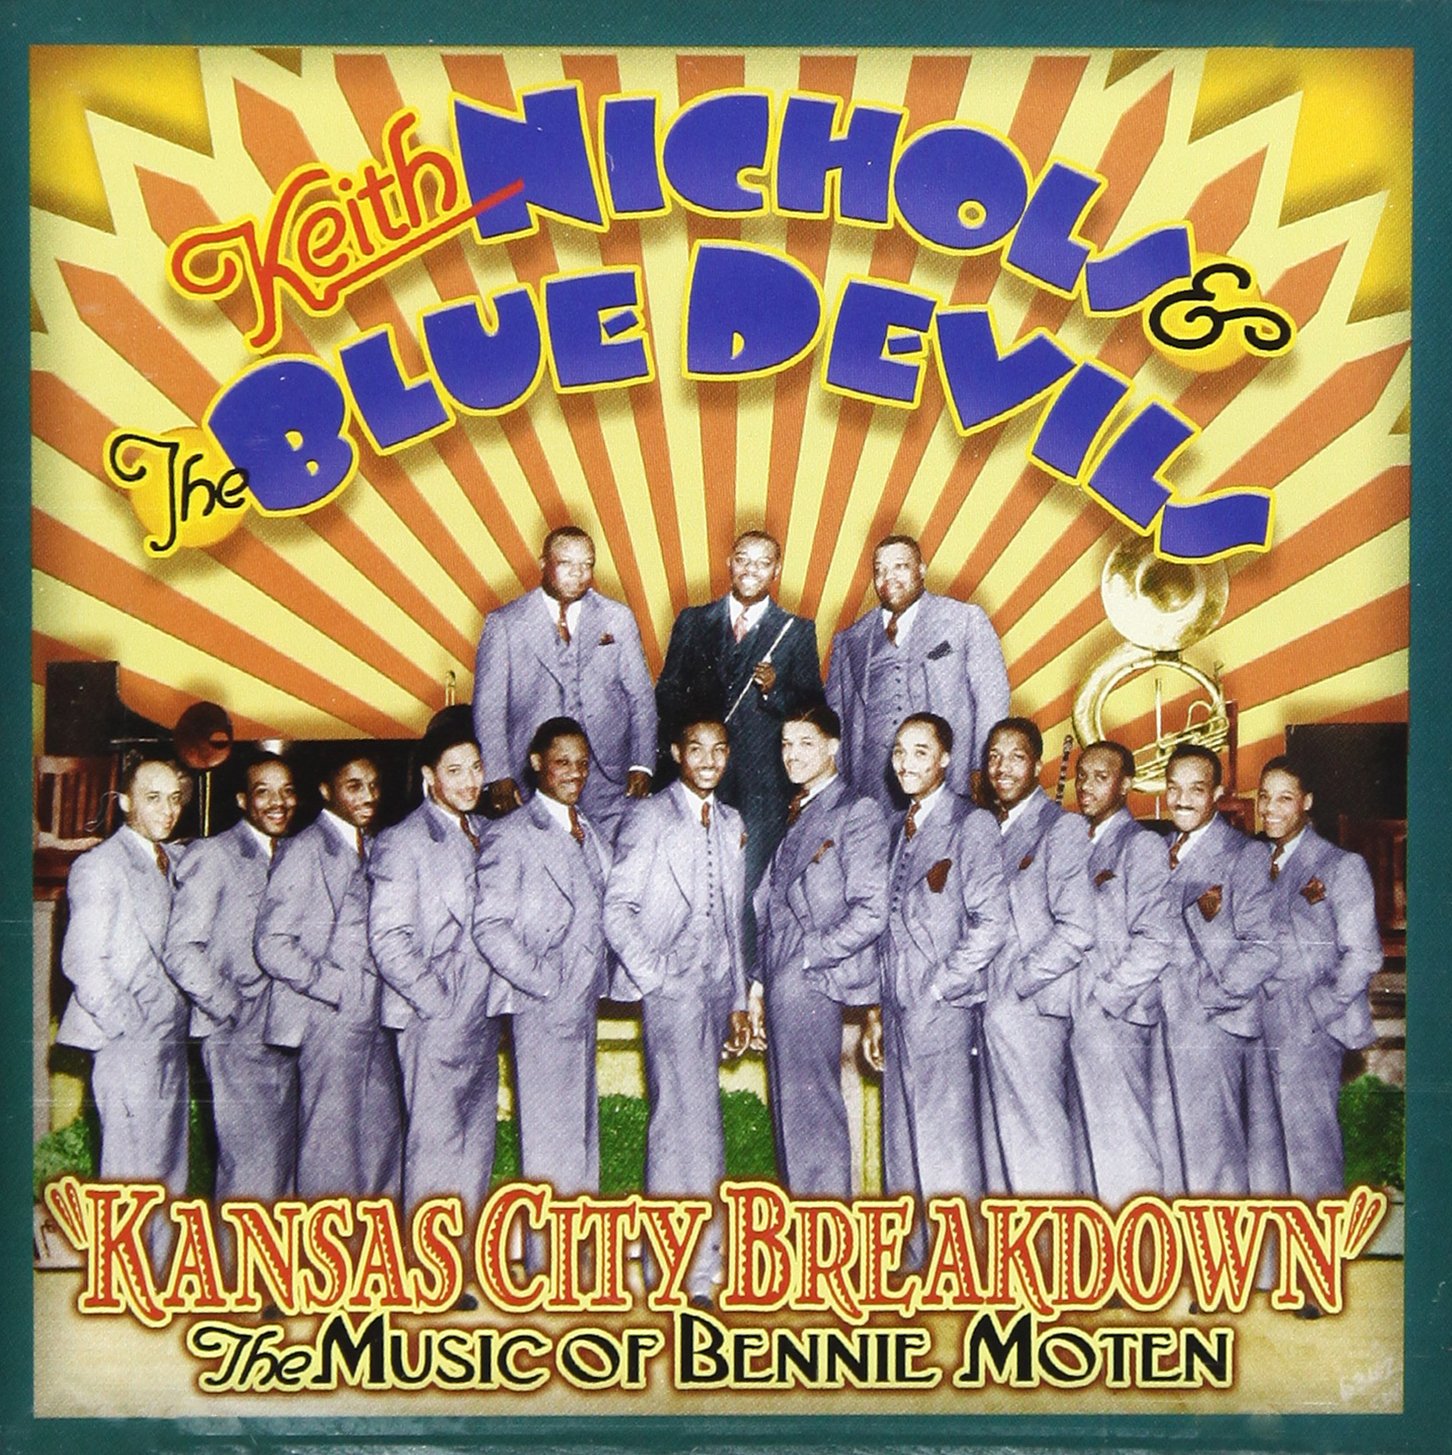 KEITH NICHOLS - Keith Nichols & The Blue Devils : Kansas City Breakdown (The Music of Bennie Moten) cover 